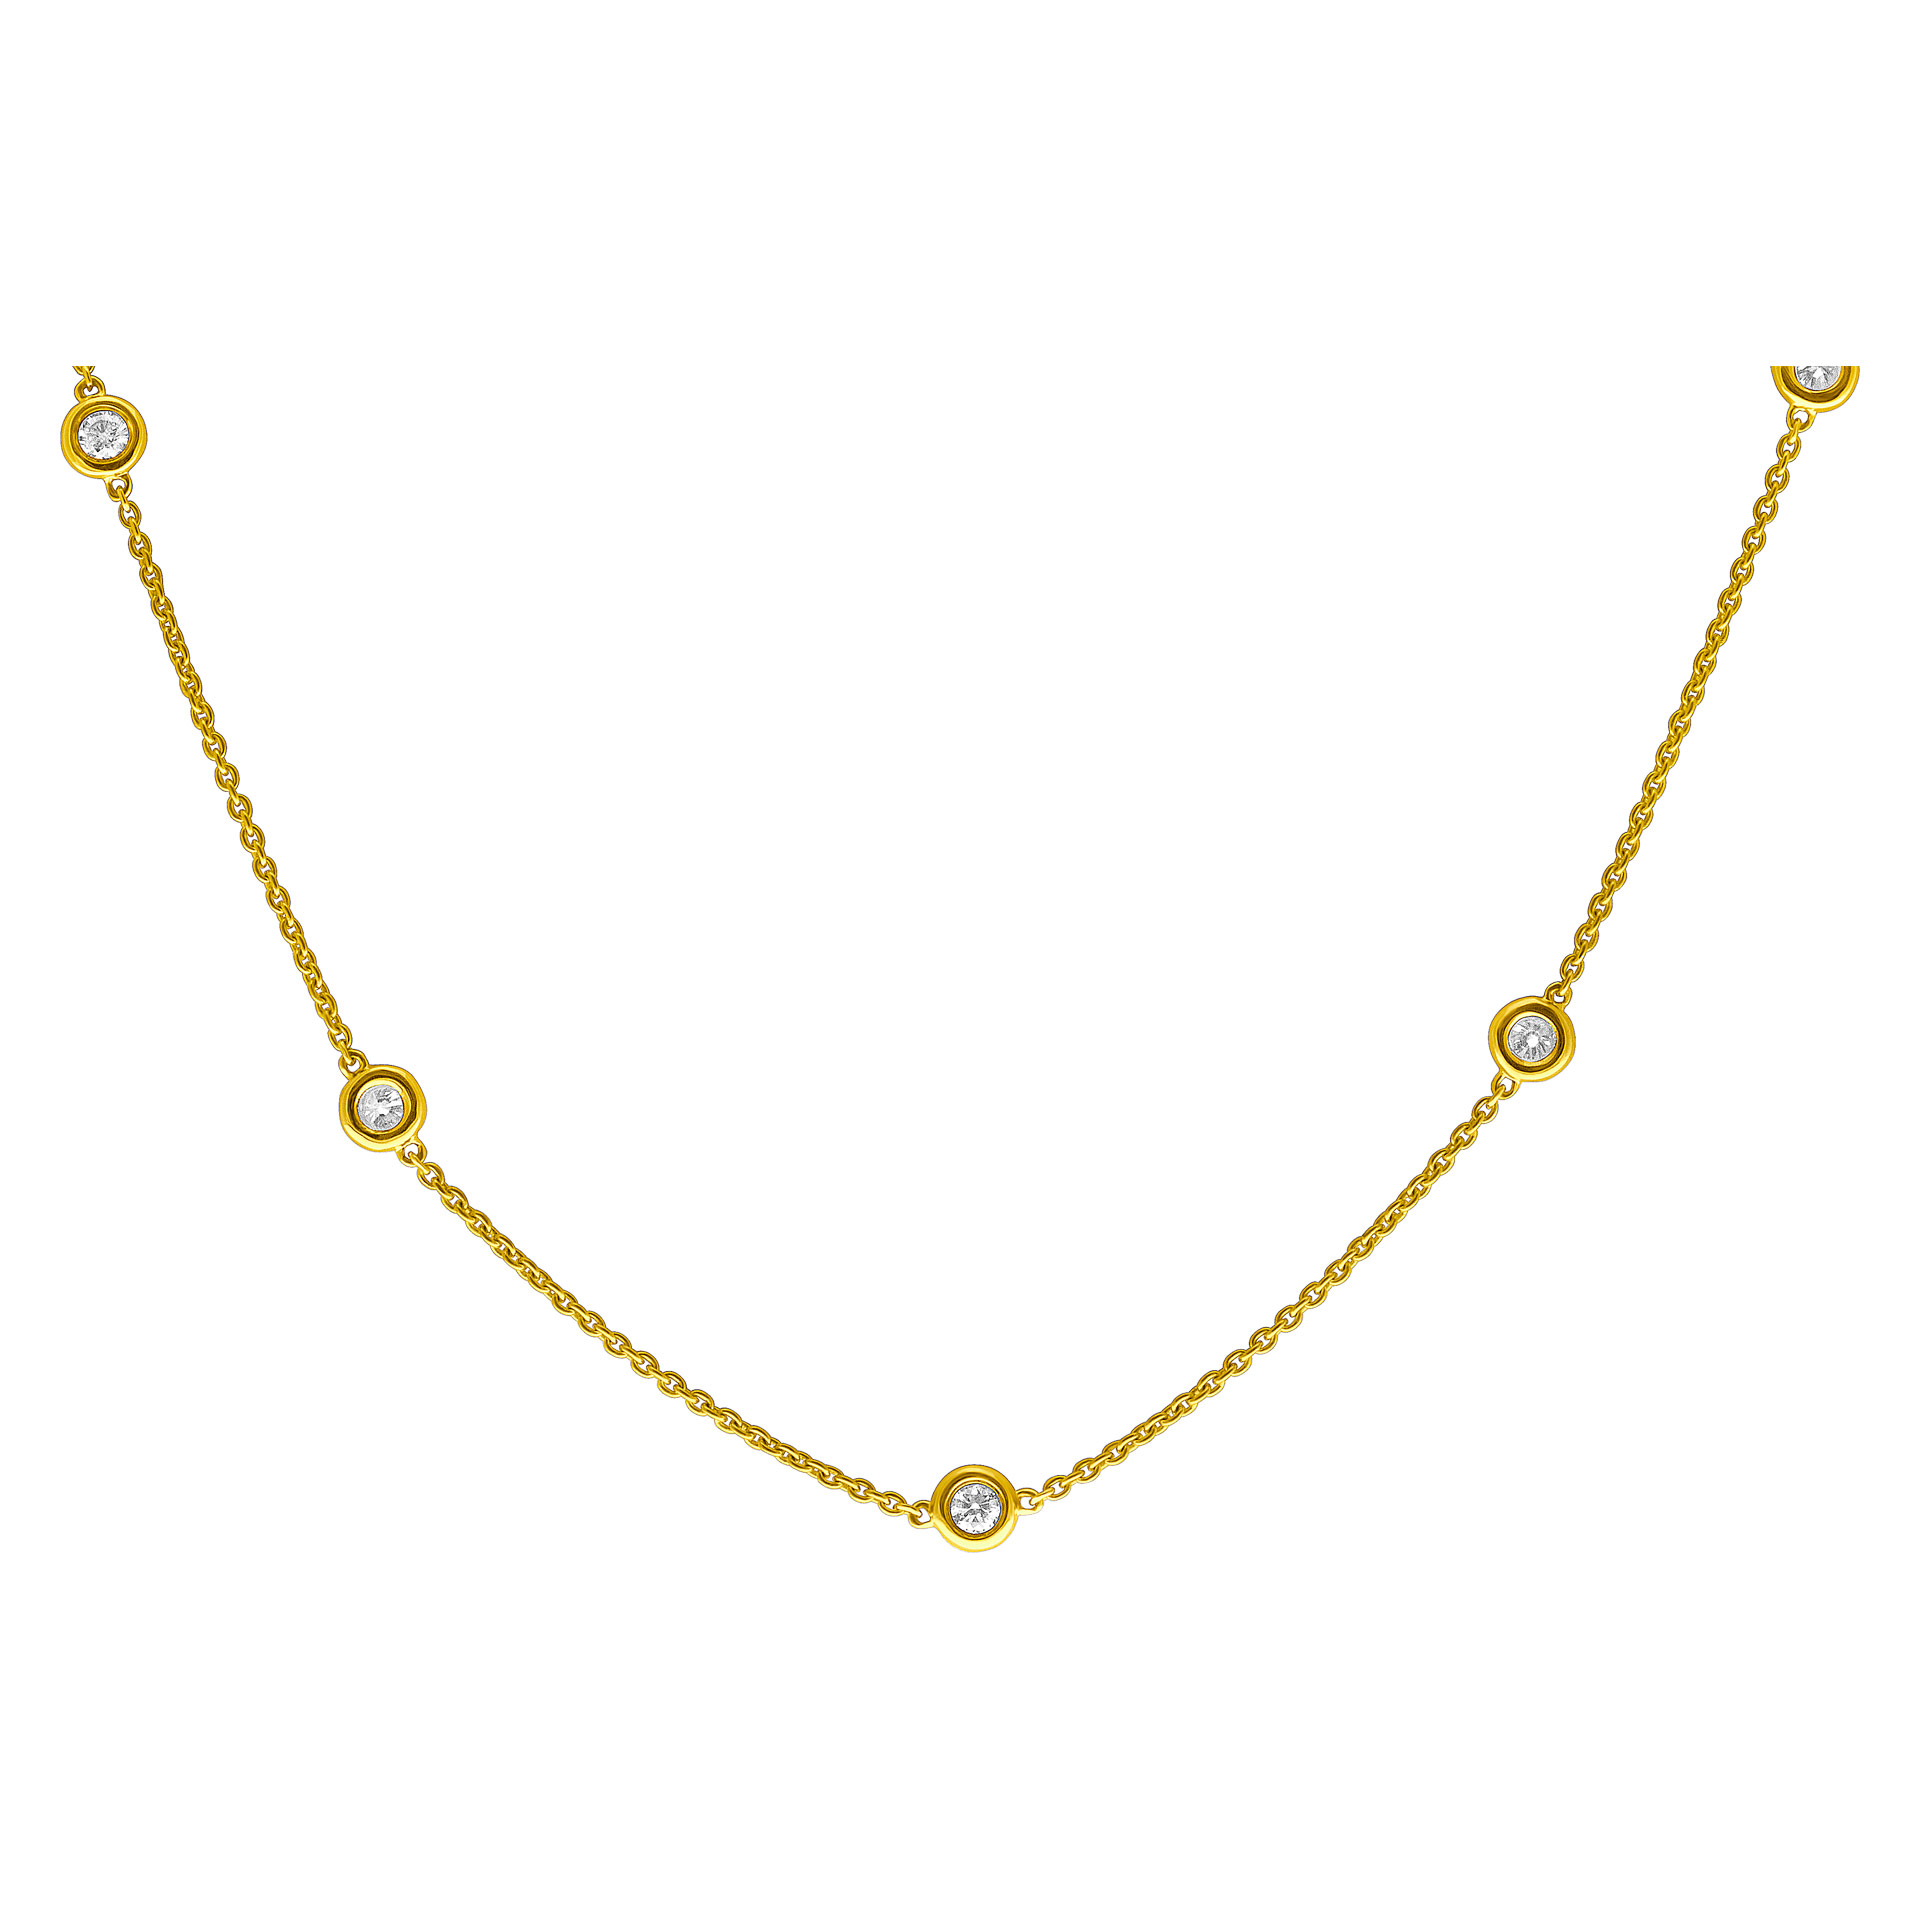 Diamonds by the yard, 14k yellow gold chain (36"), with 2.25 carats round brilliant cut serti diamonds. image 1